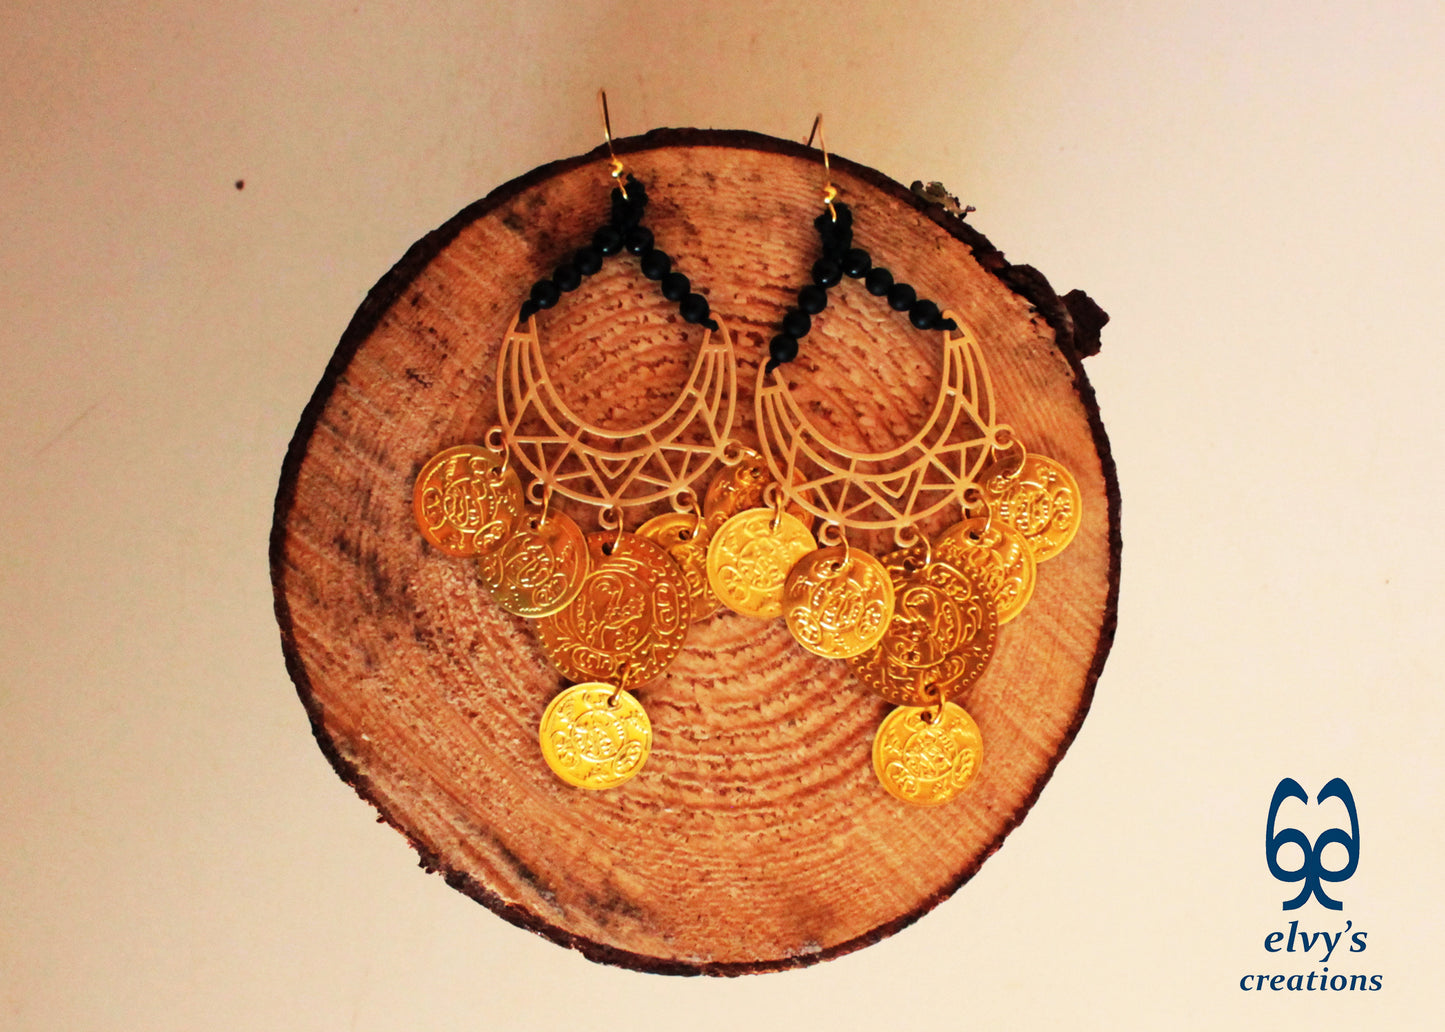 Gold Macrame Earrings with Onyx Gemstones Gypsy Earrings with Coins Boho Dangle with Coins, Μακραμέ Σκουλαρίκια με Χρυσά Φλουριά και Κρυστάλλους Όνυχα